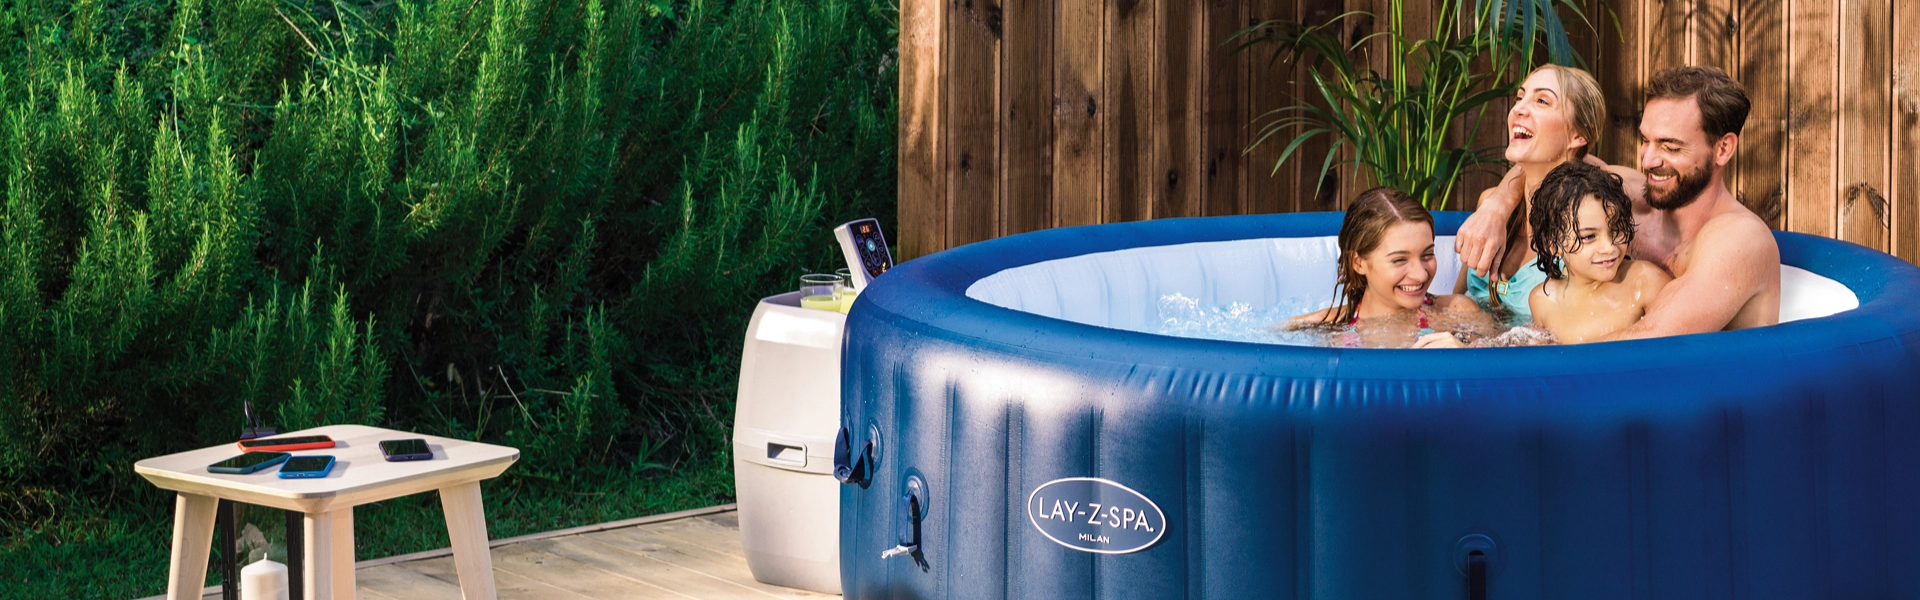 Inflatable Hot Tub | Portable Spa | Bestway UK